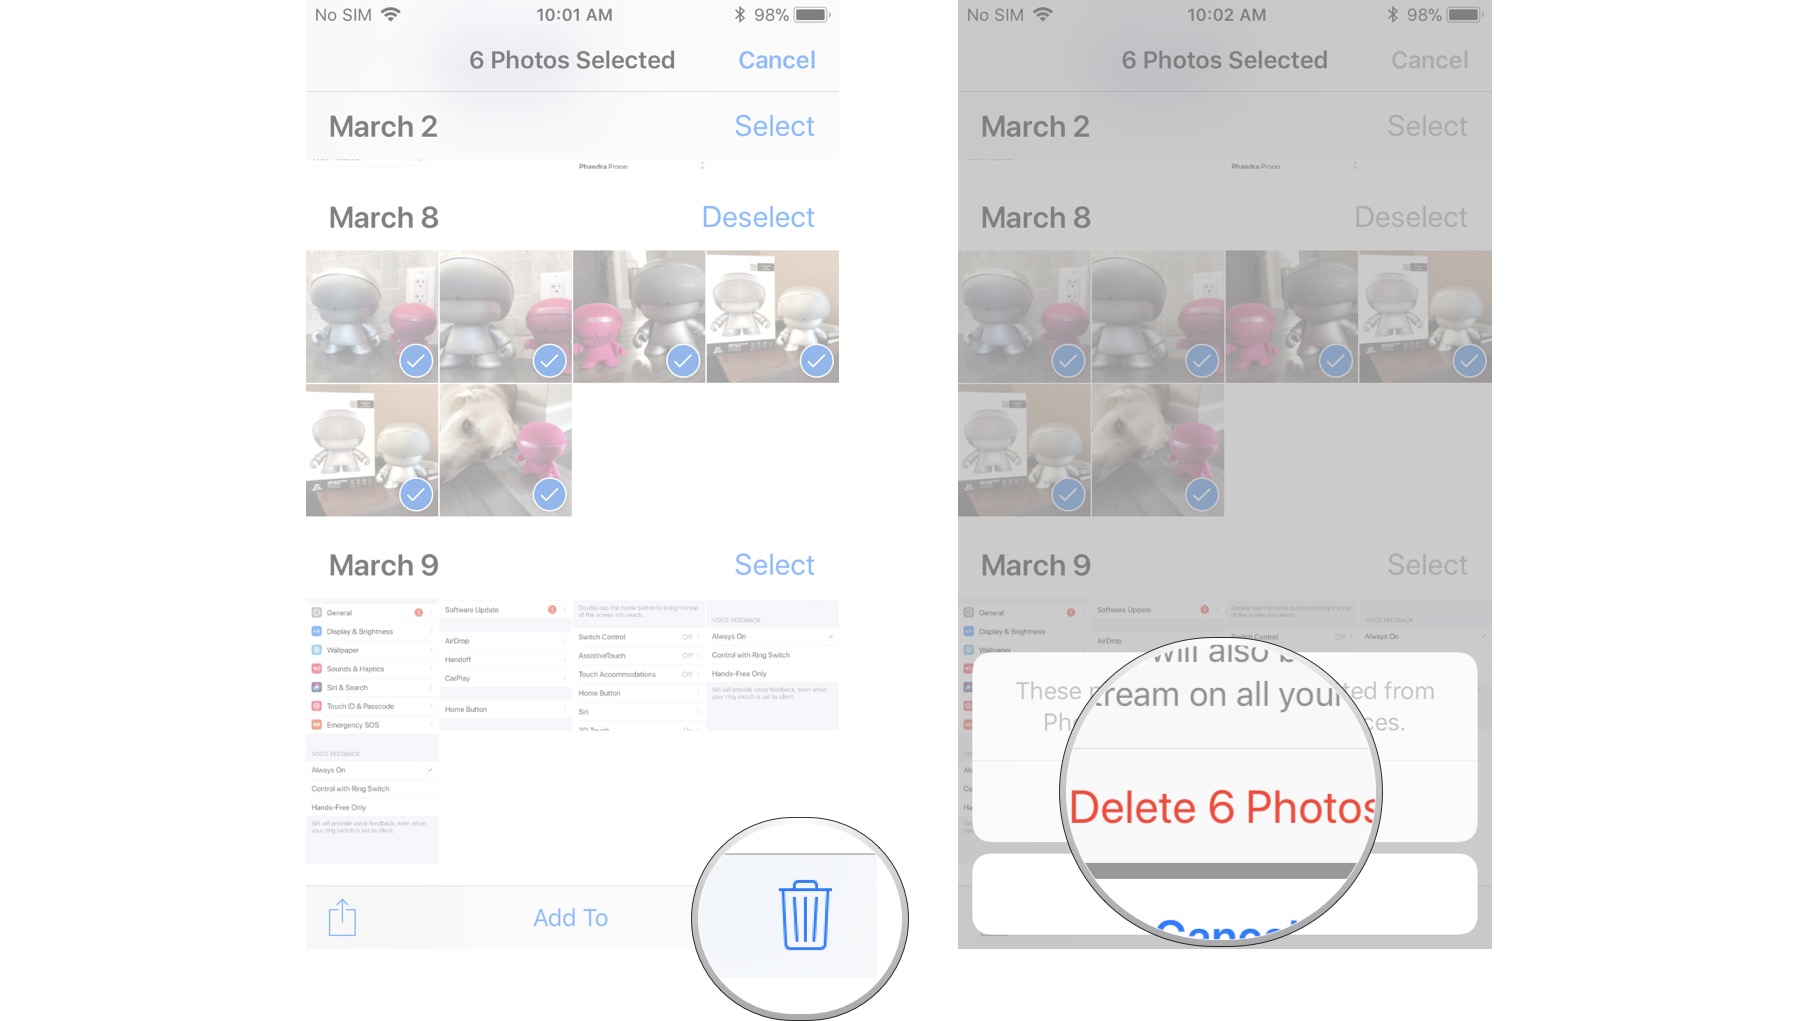 Tap the delete button, tap Delete Photos in the prompt